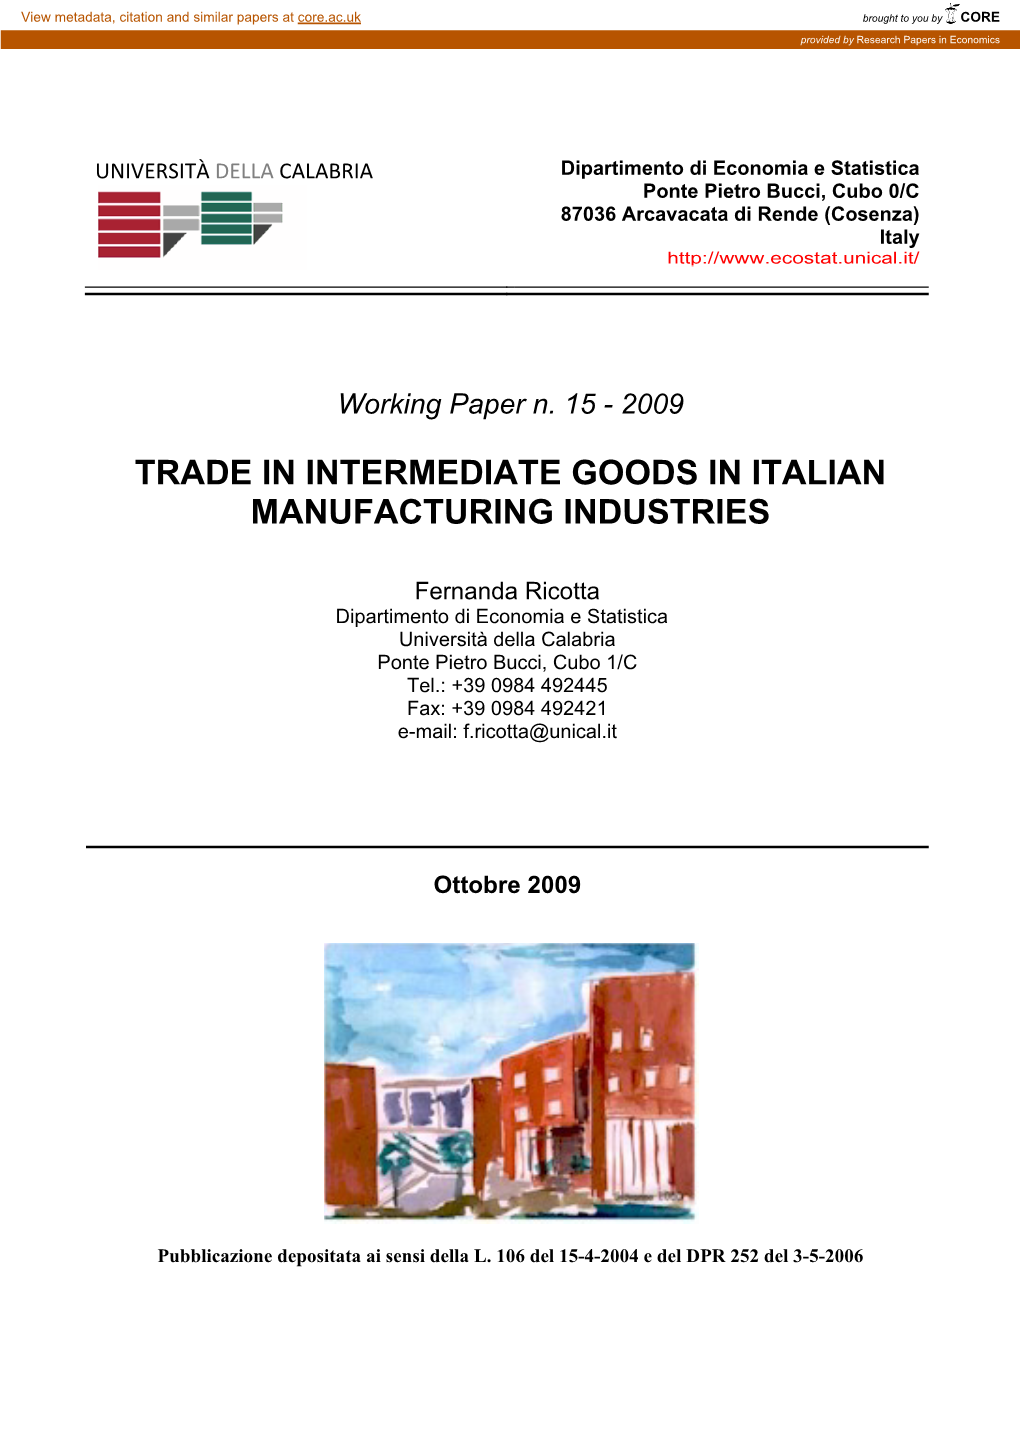 Trade in Intermediate Goods in Italian Manufacturing Industries